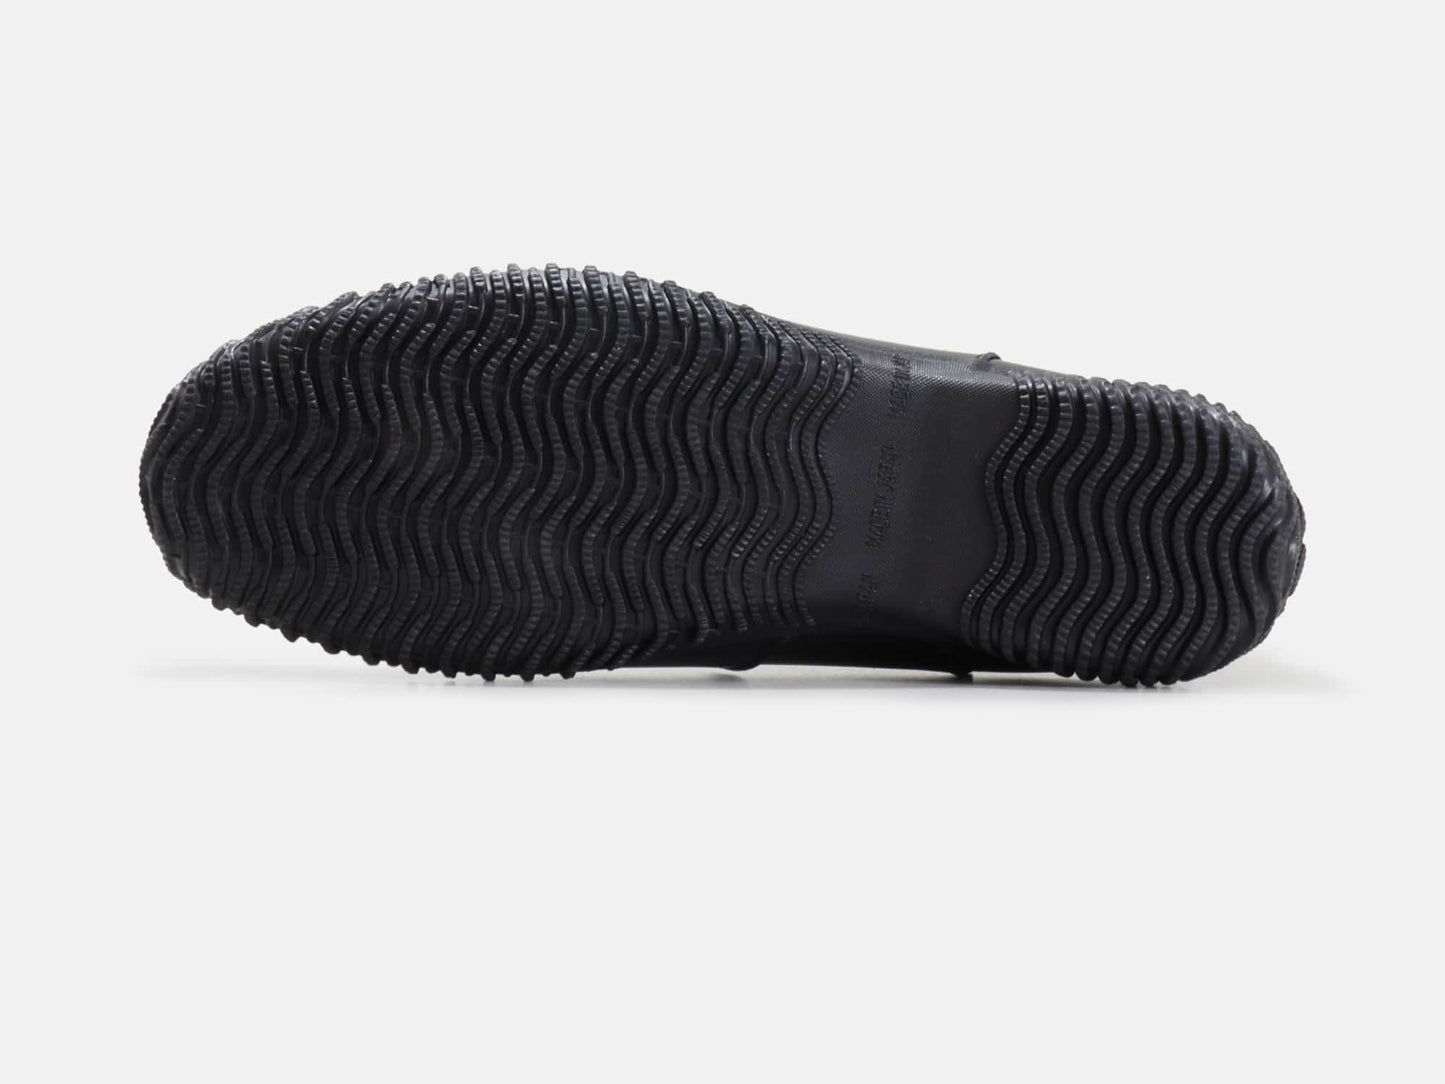 SPINGLE Bizのスニーカー「Biz-603 Black」の靴底の商品画像